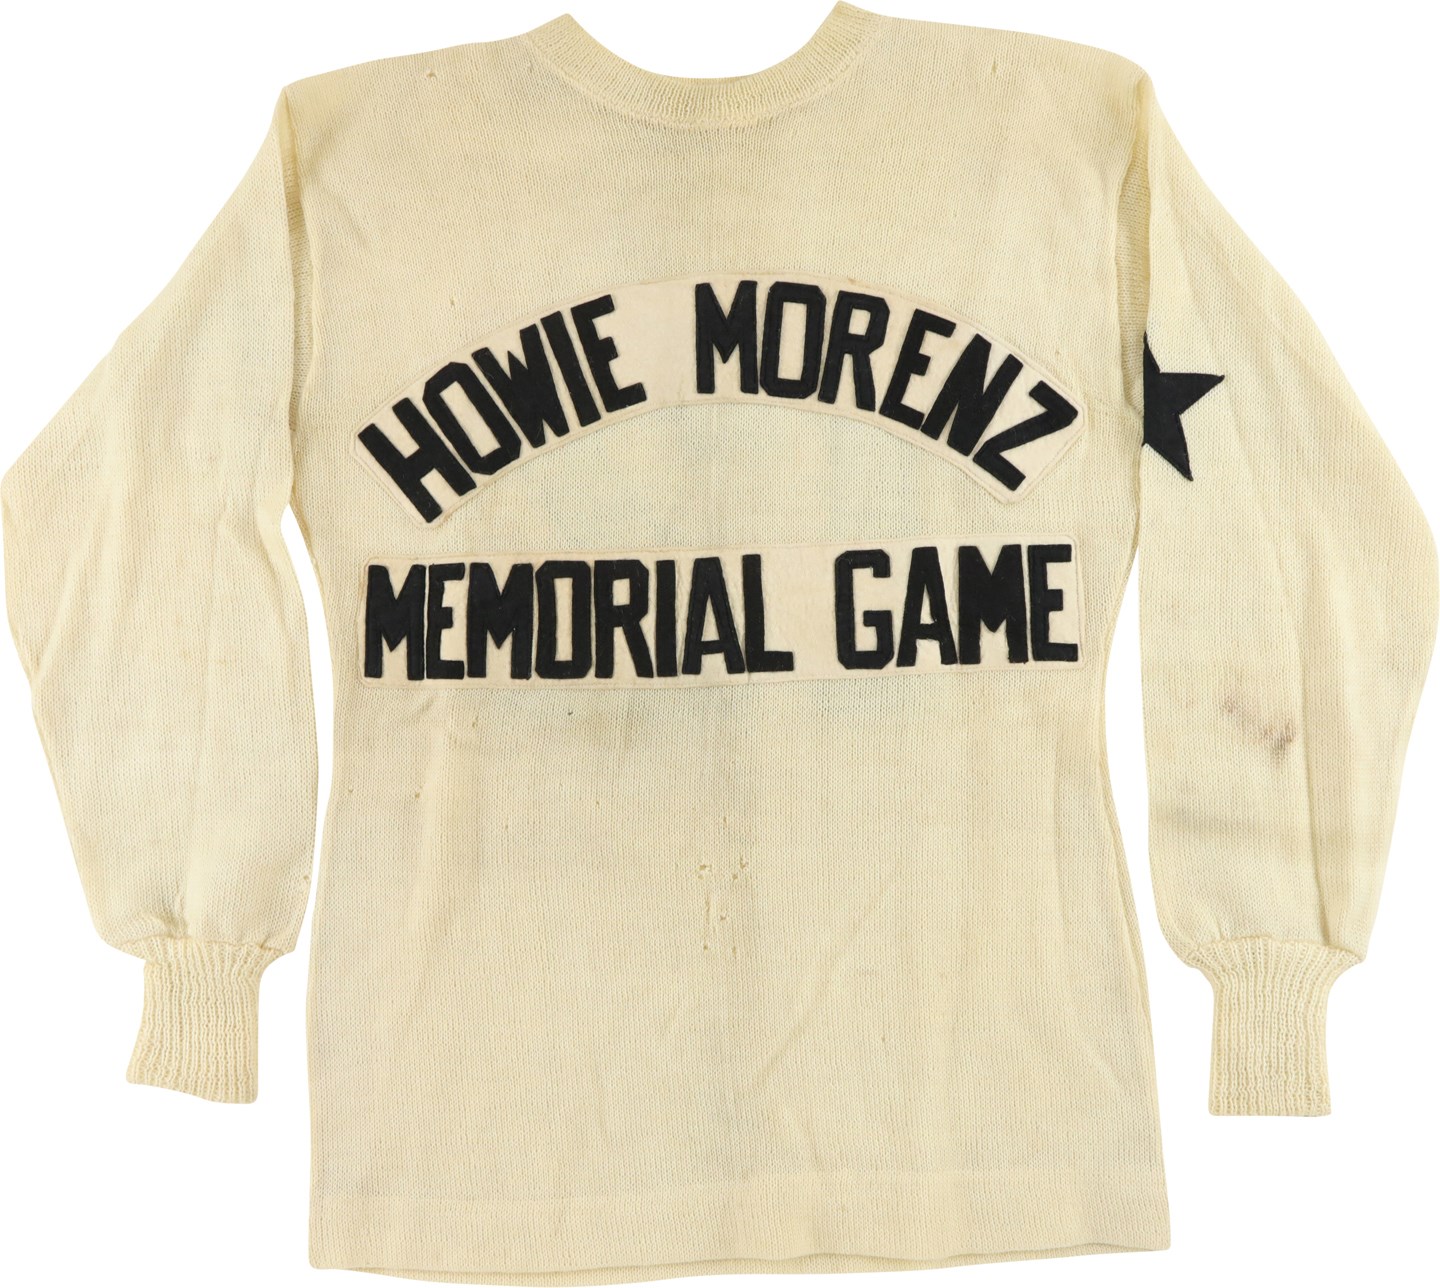 Hockey - 1937 Howie Morenz All-Star Game Worn Jersey Worn by Johnny Gottselig